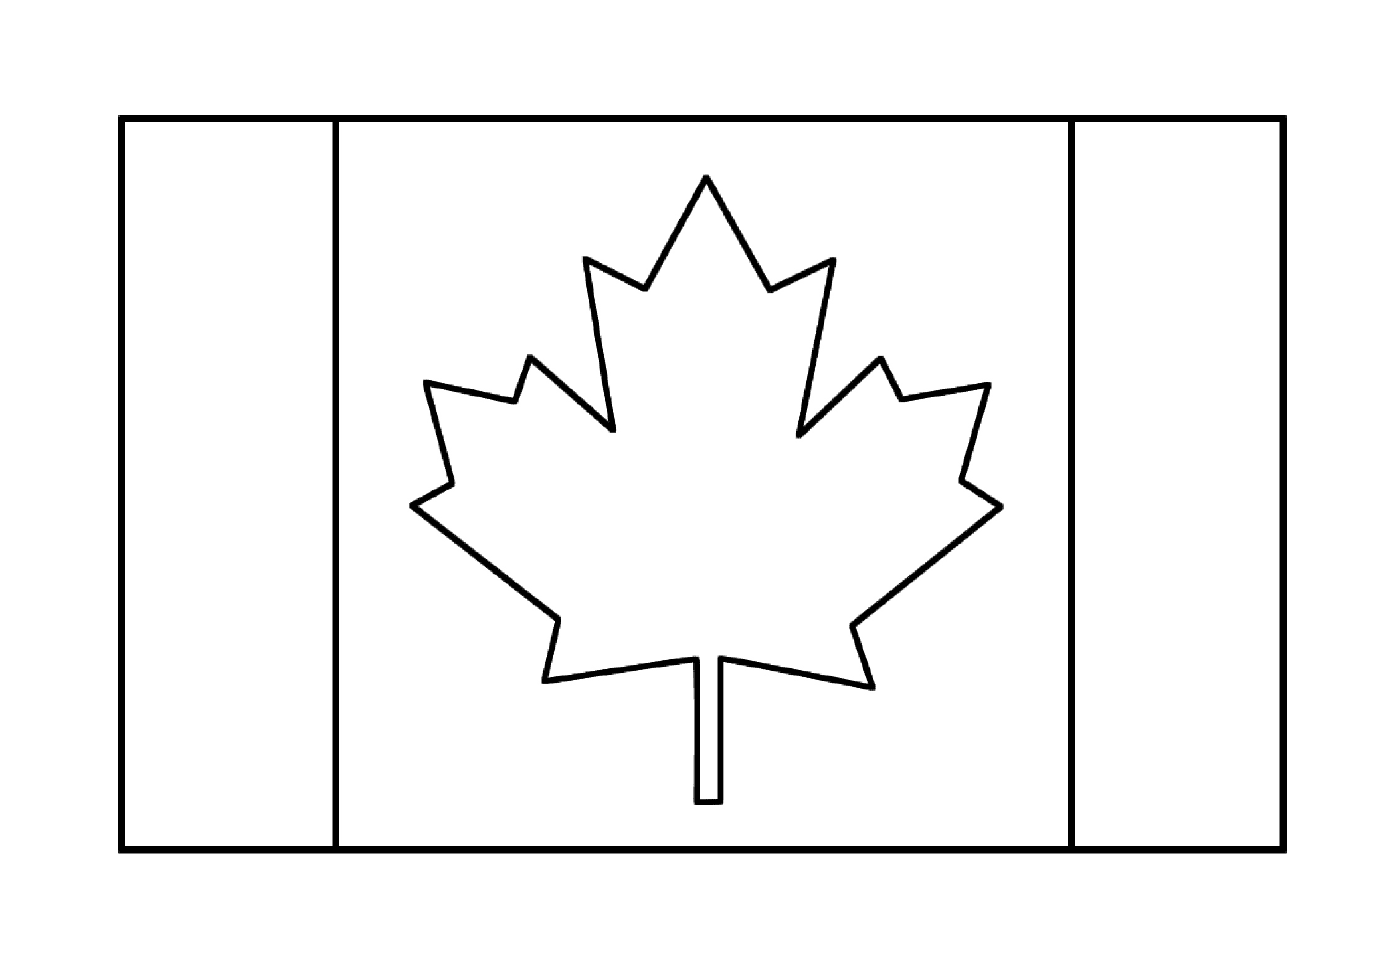  Канадский флаг 